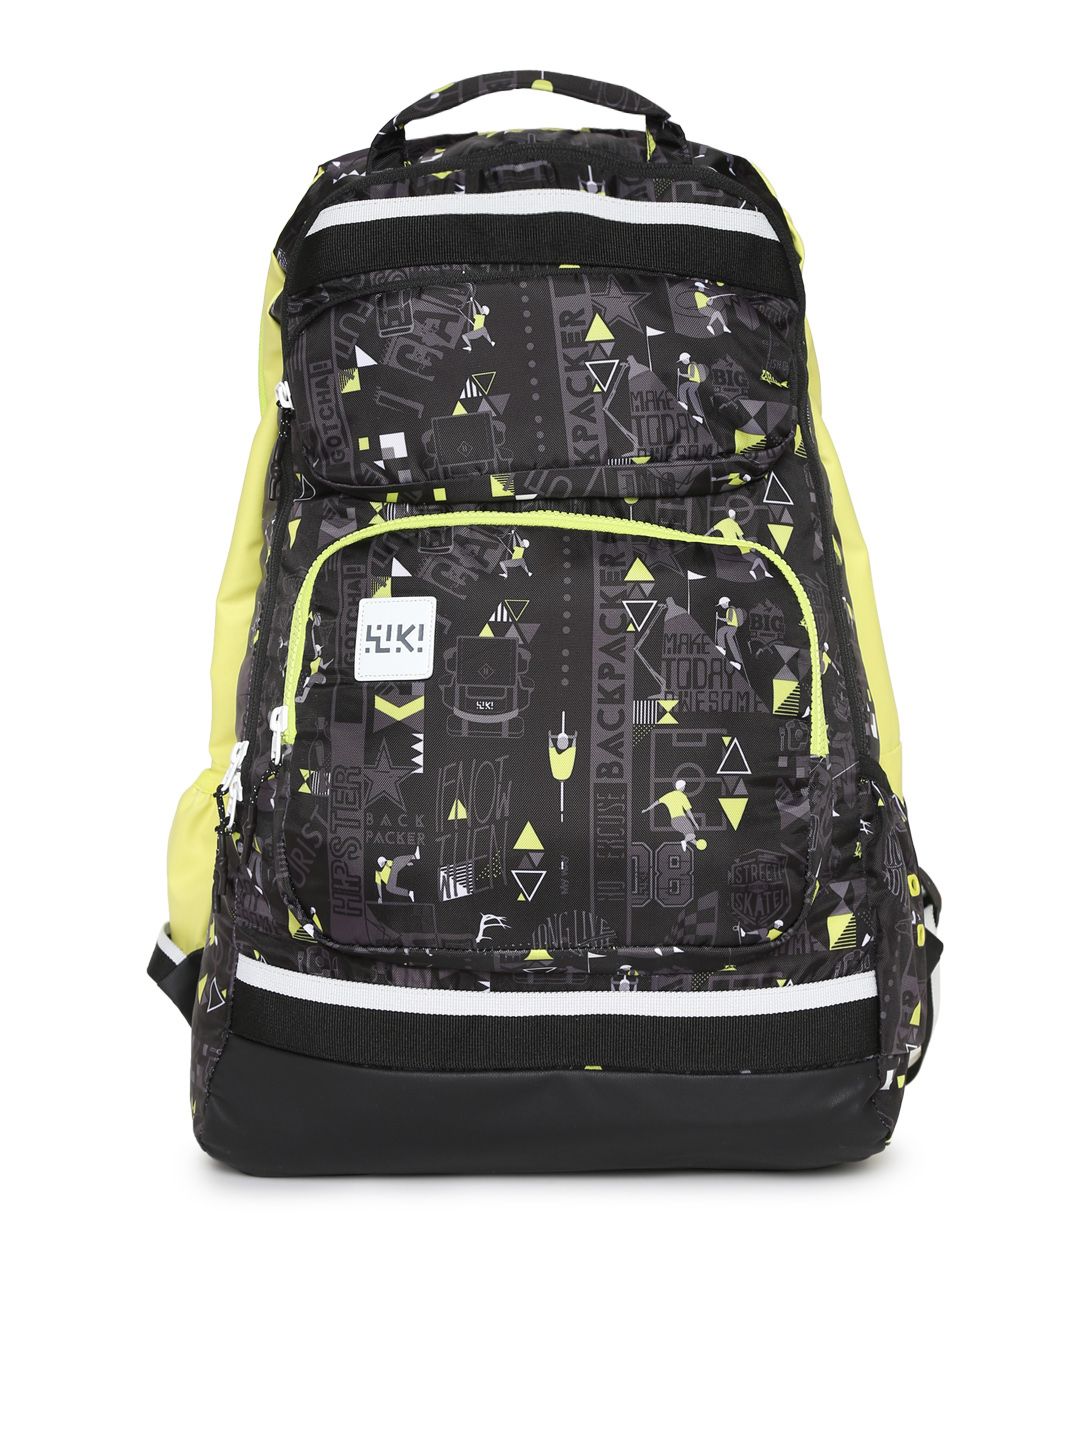 Wildcraft Toss Unisex Black & Fluorescent Green Graphic Reversible Backpack Price in India